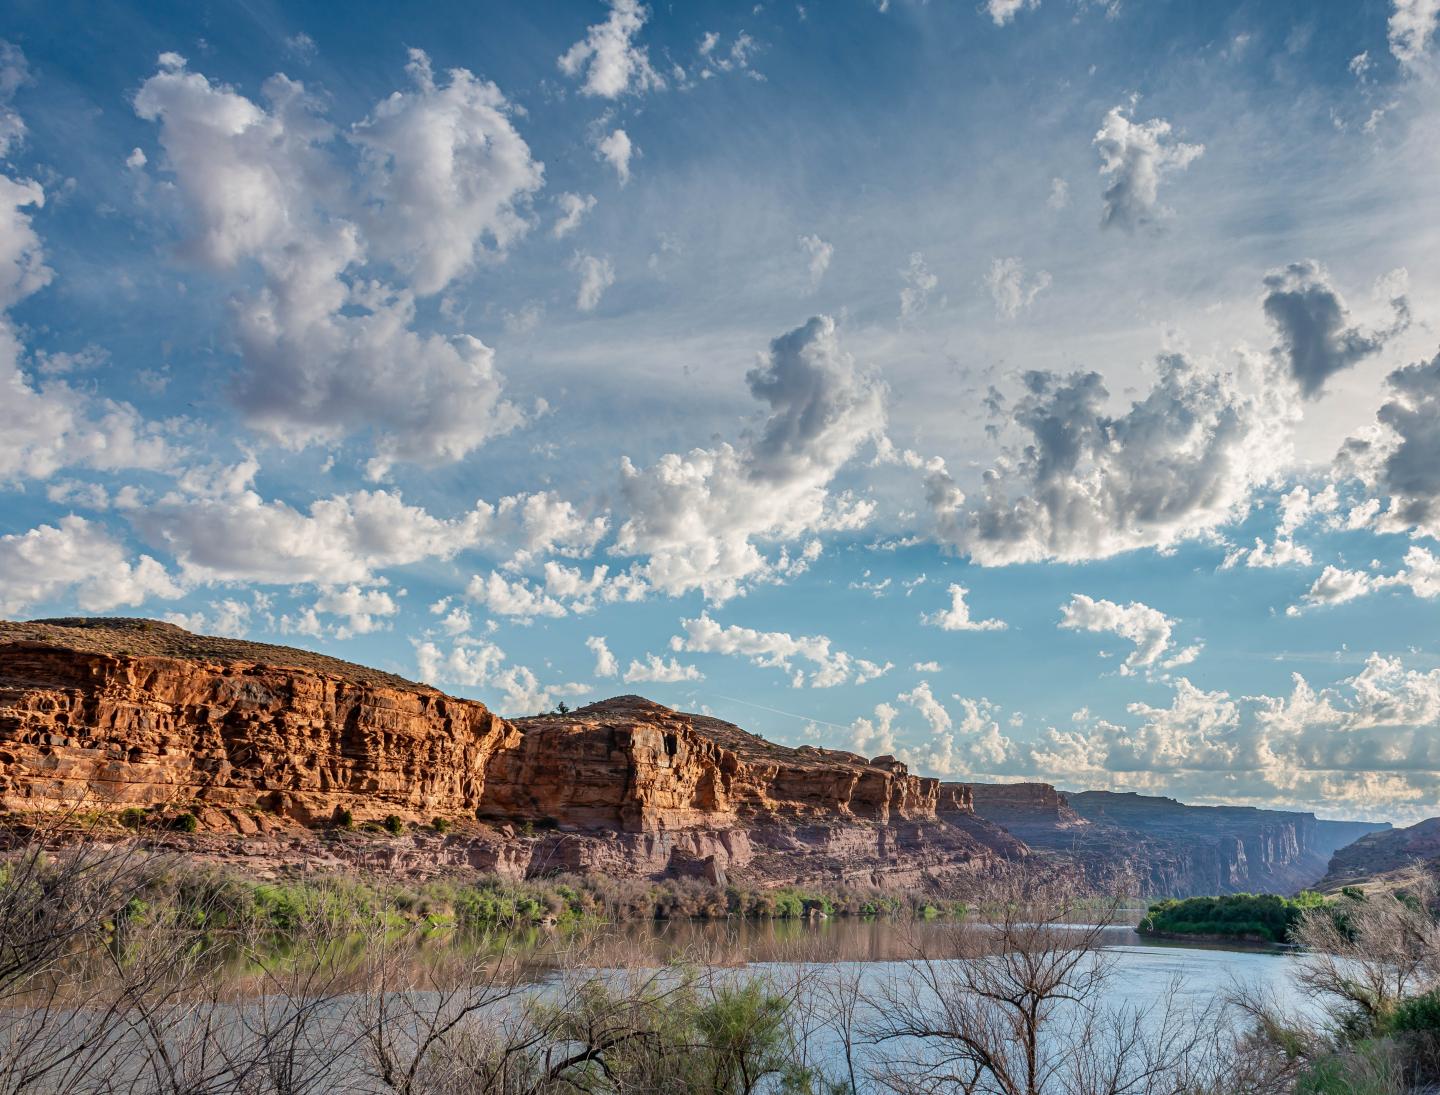 The Colorado River near Moab, Utah.